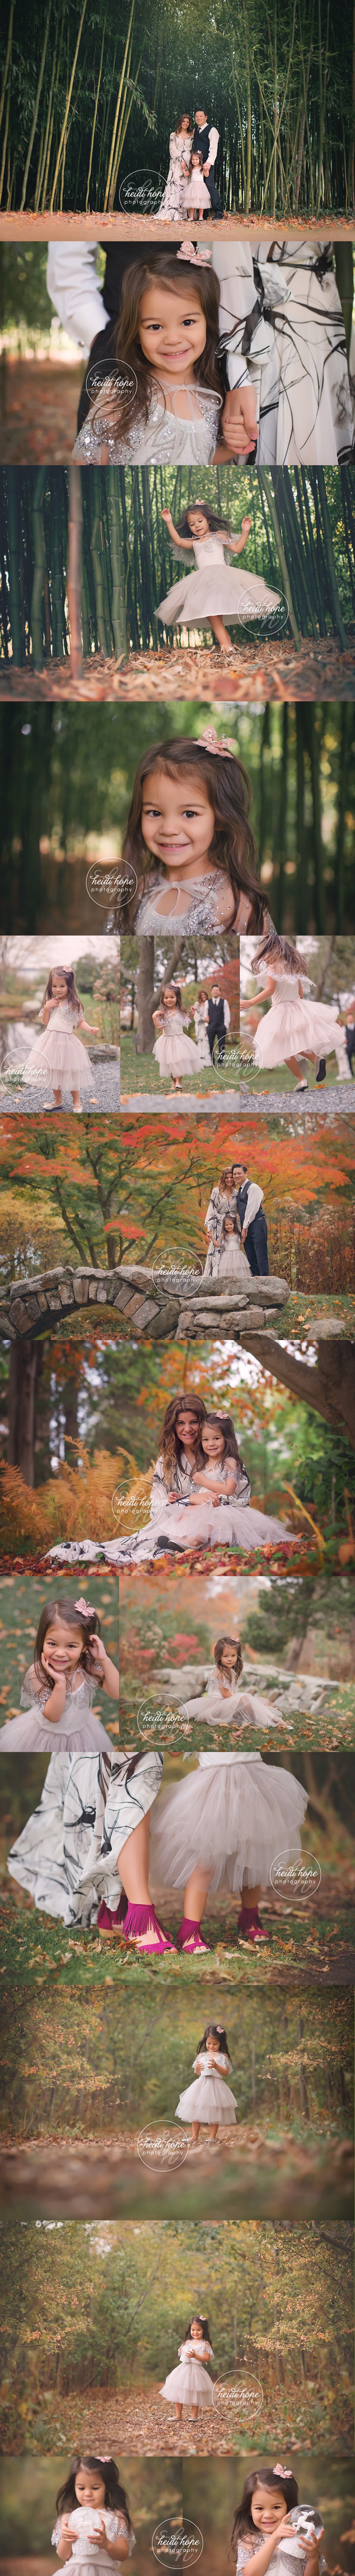 autumn family portraits with tutudumonde dress in the fall foliage